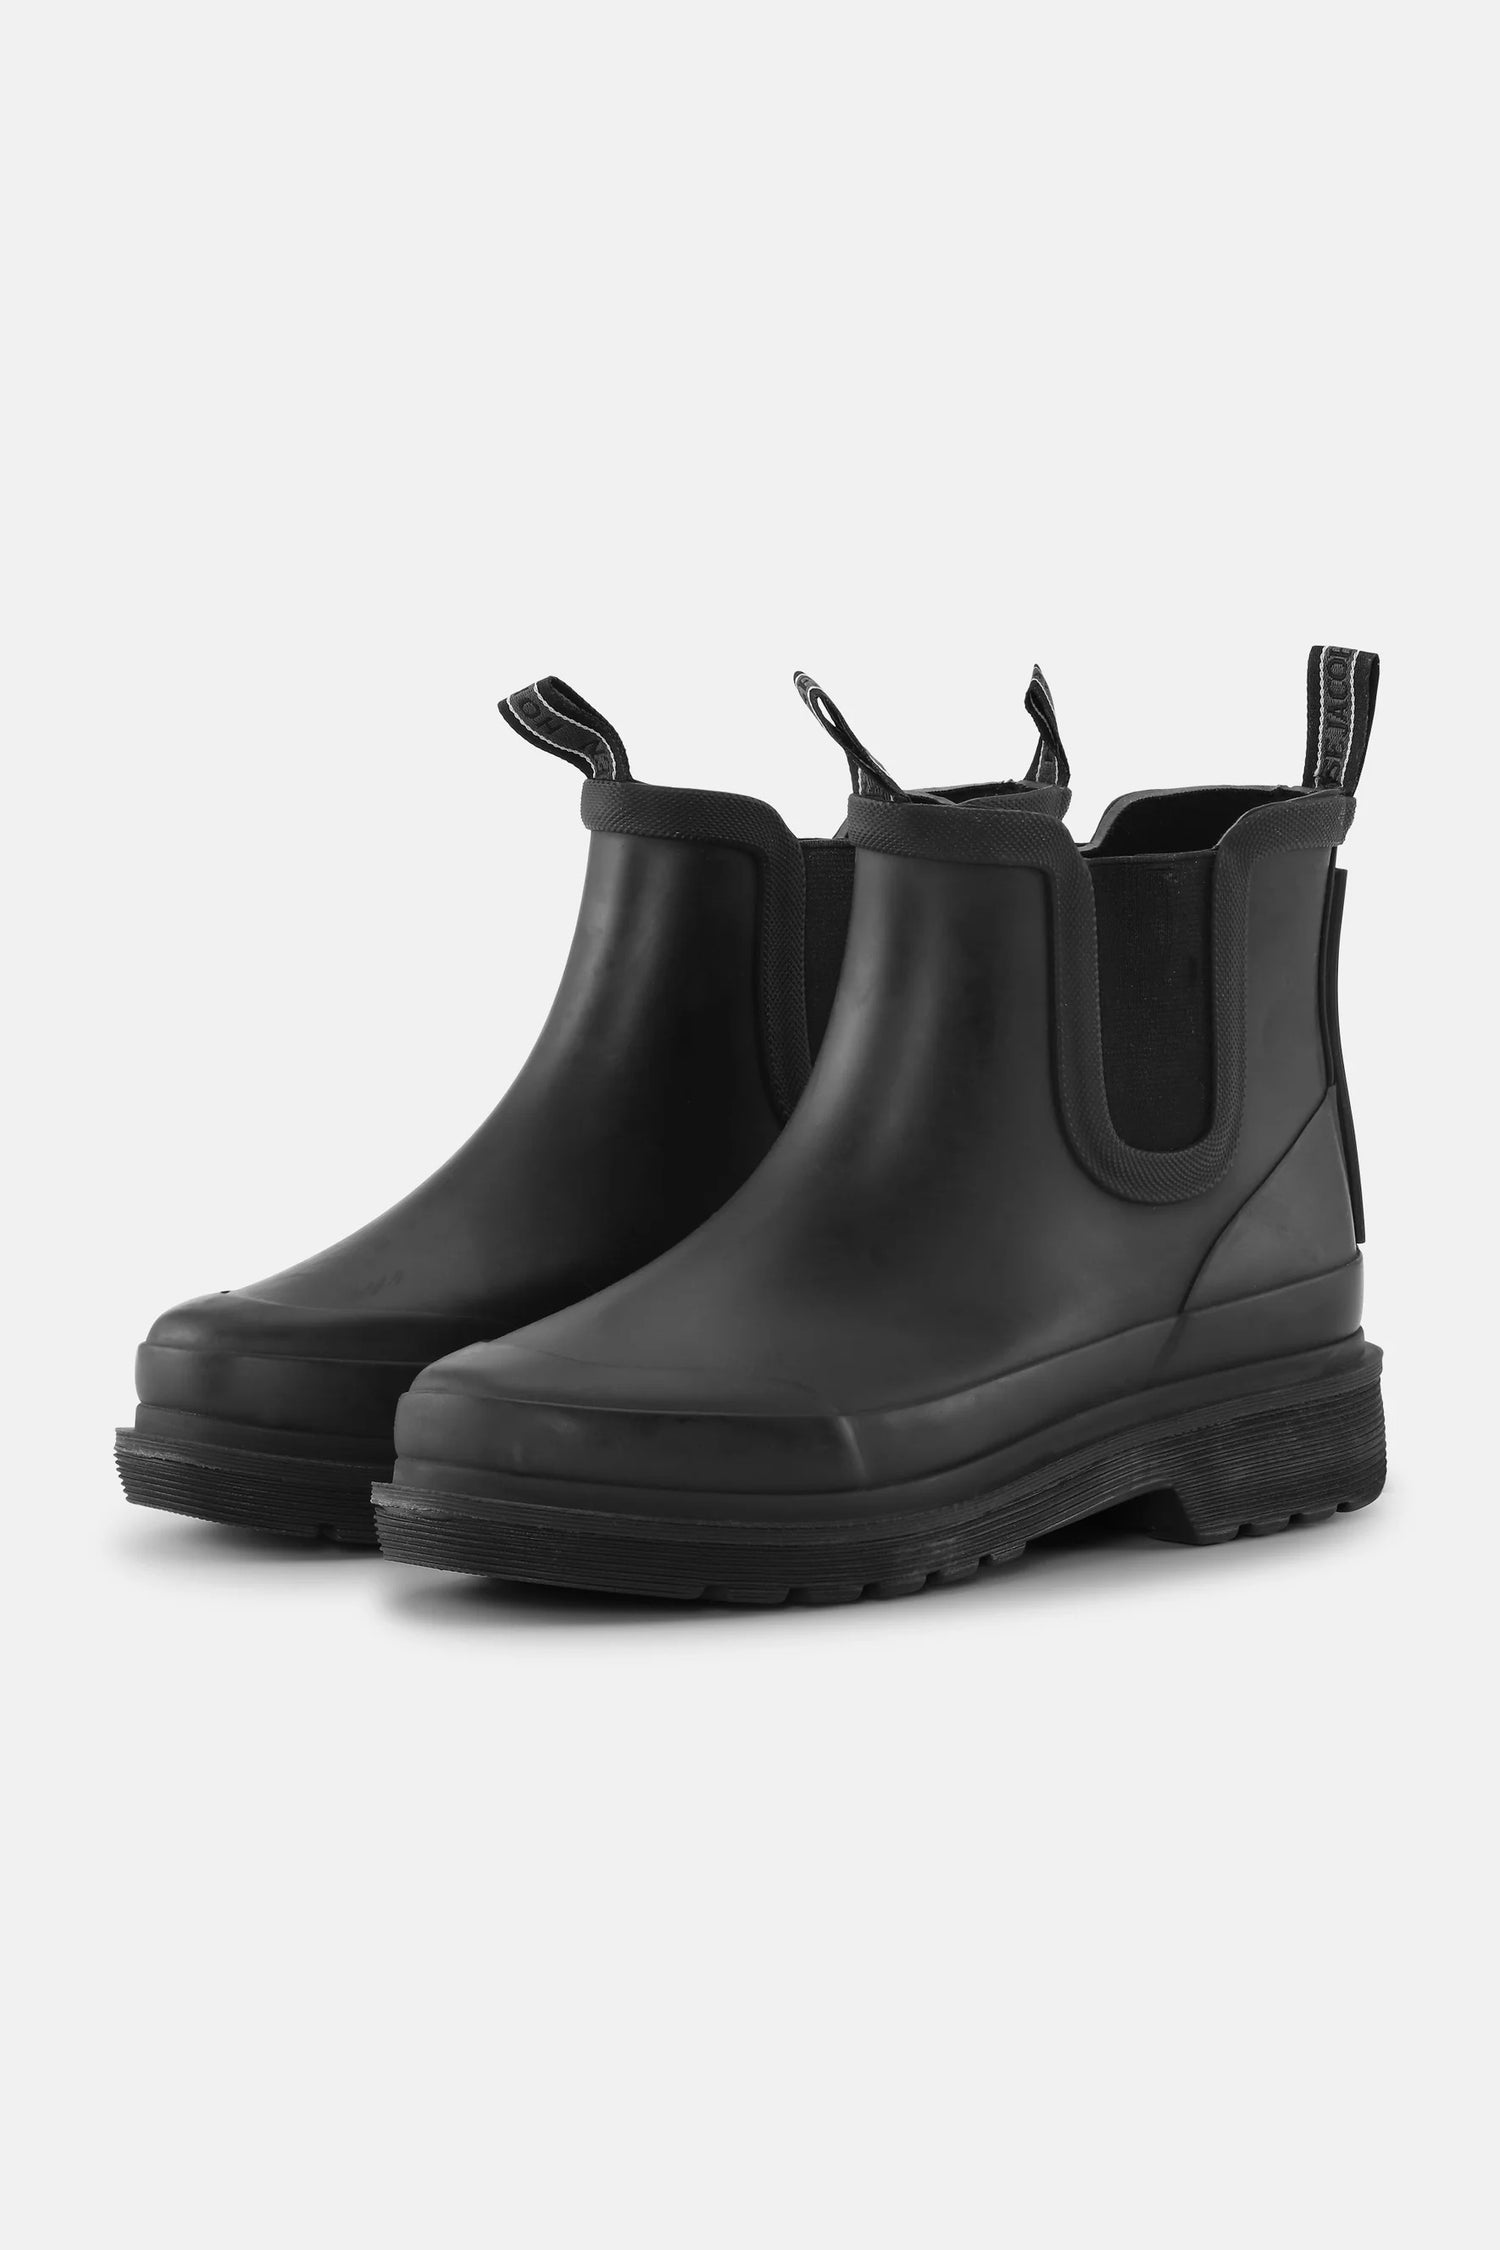 Wellie Boots - RUB30C - Black